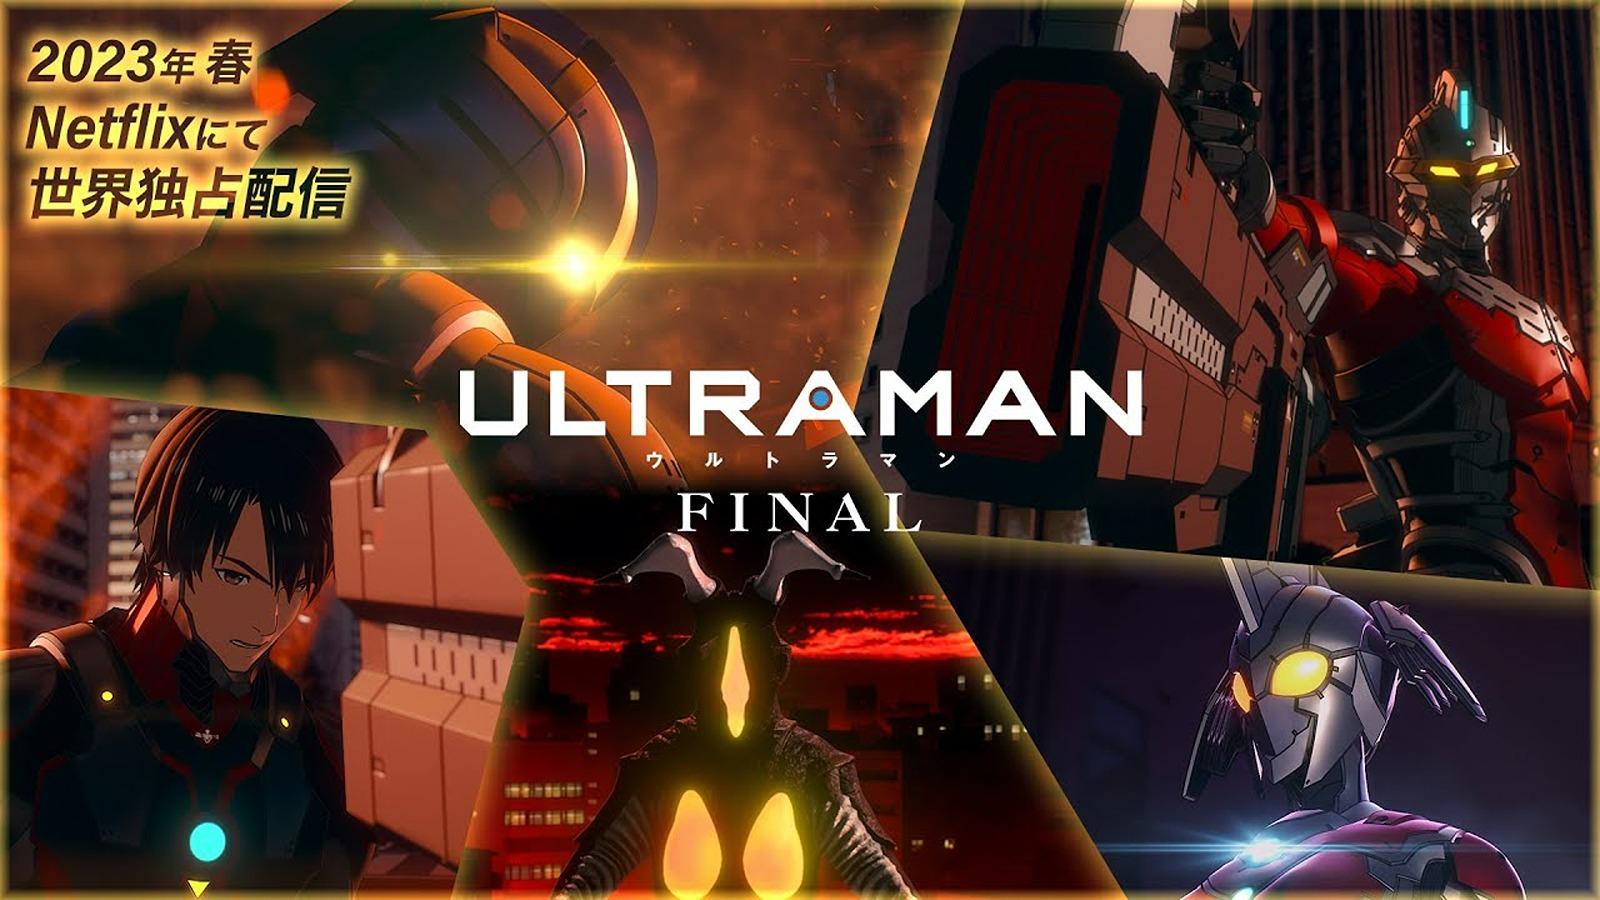 The official poster of Netflix anime Ultraman season 3